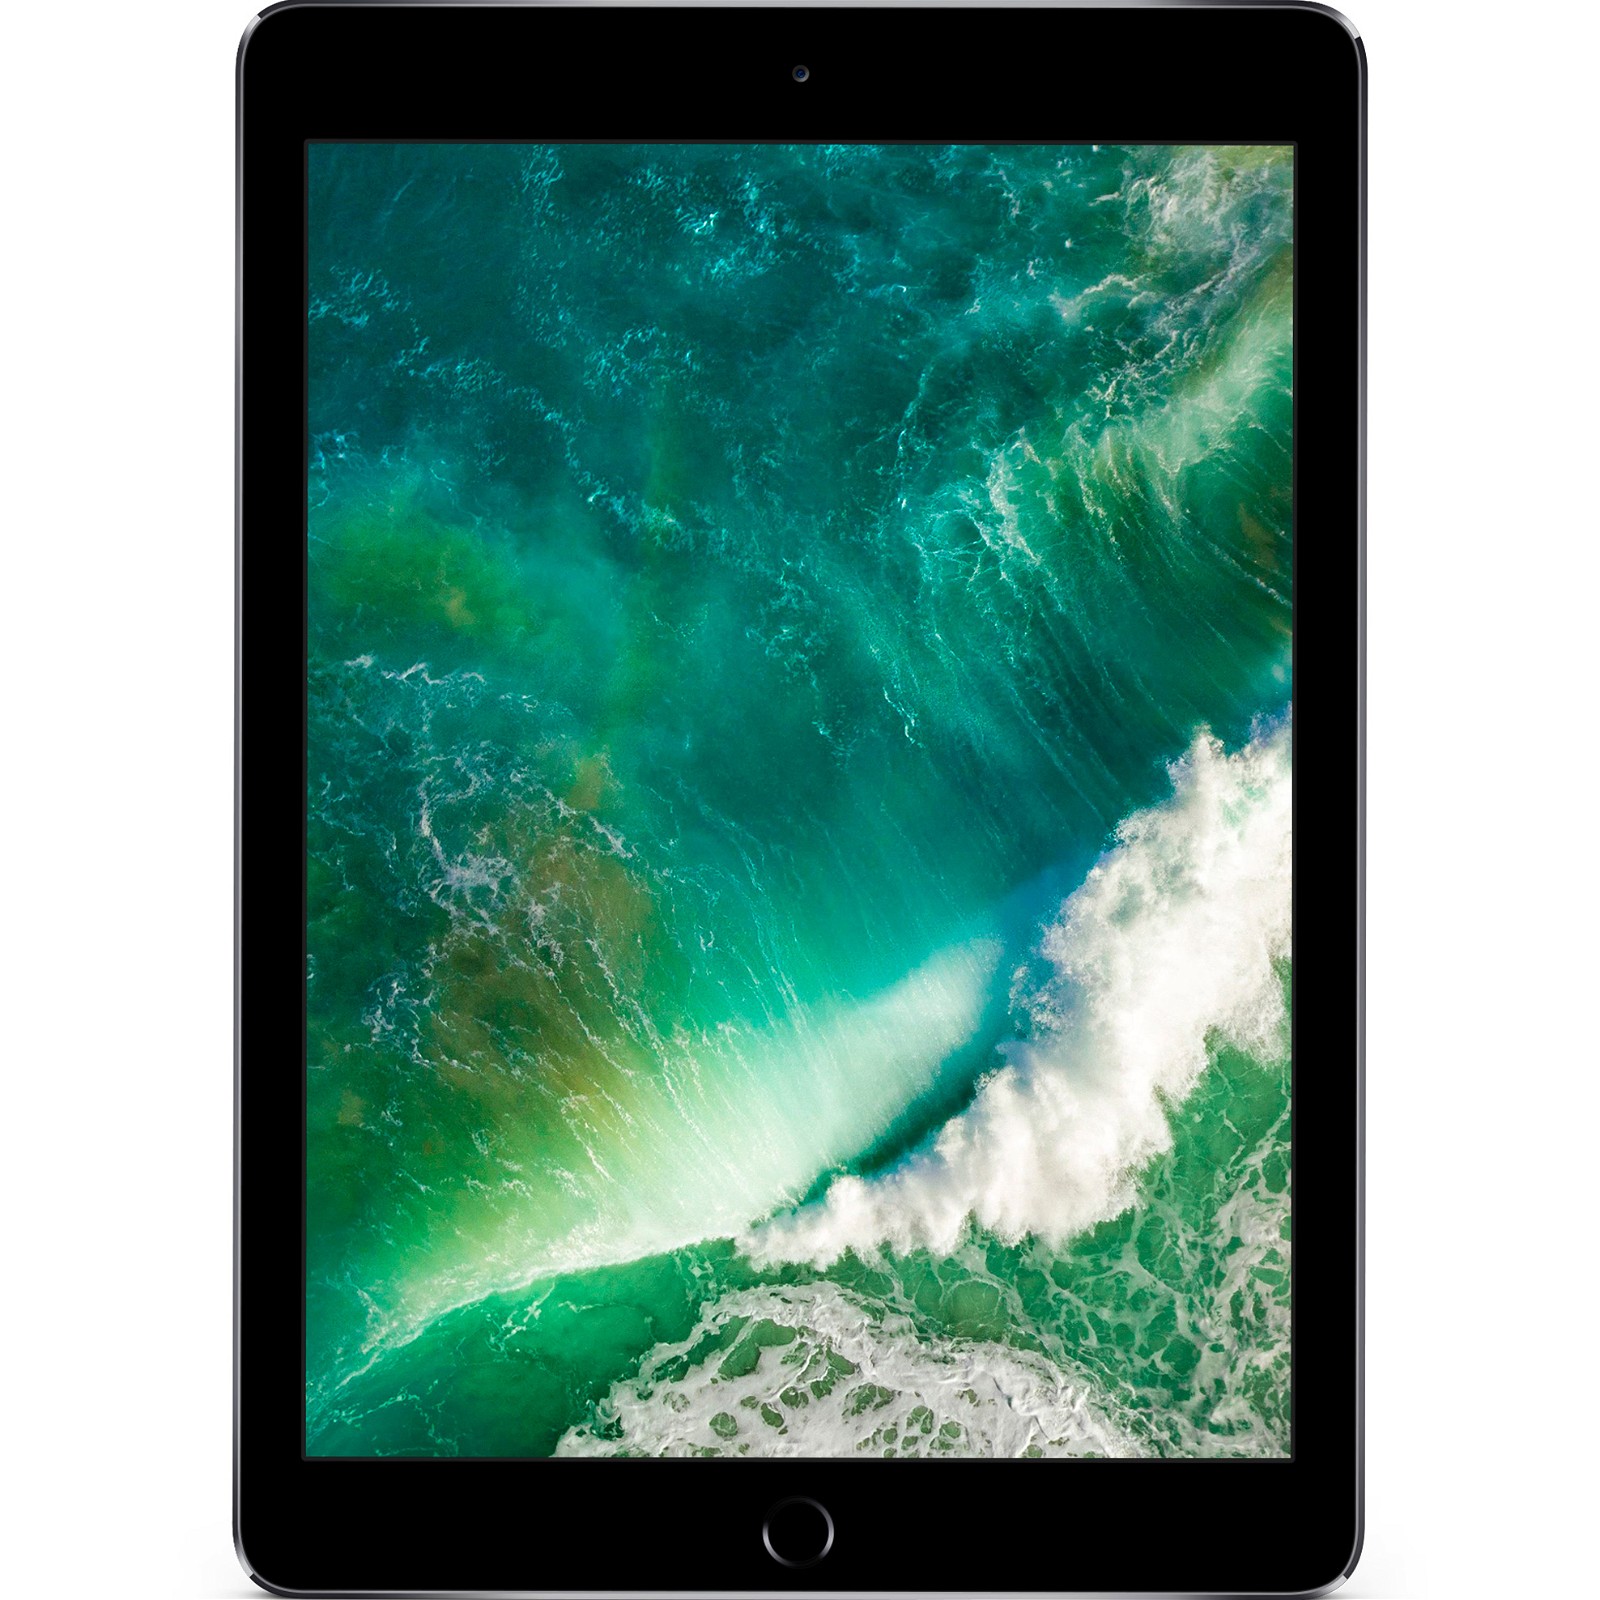 Apple iPad 5 128GB Space Gray refurbished Grade B